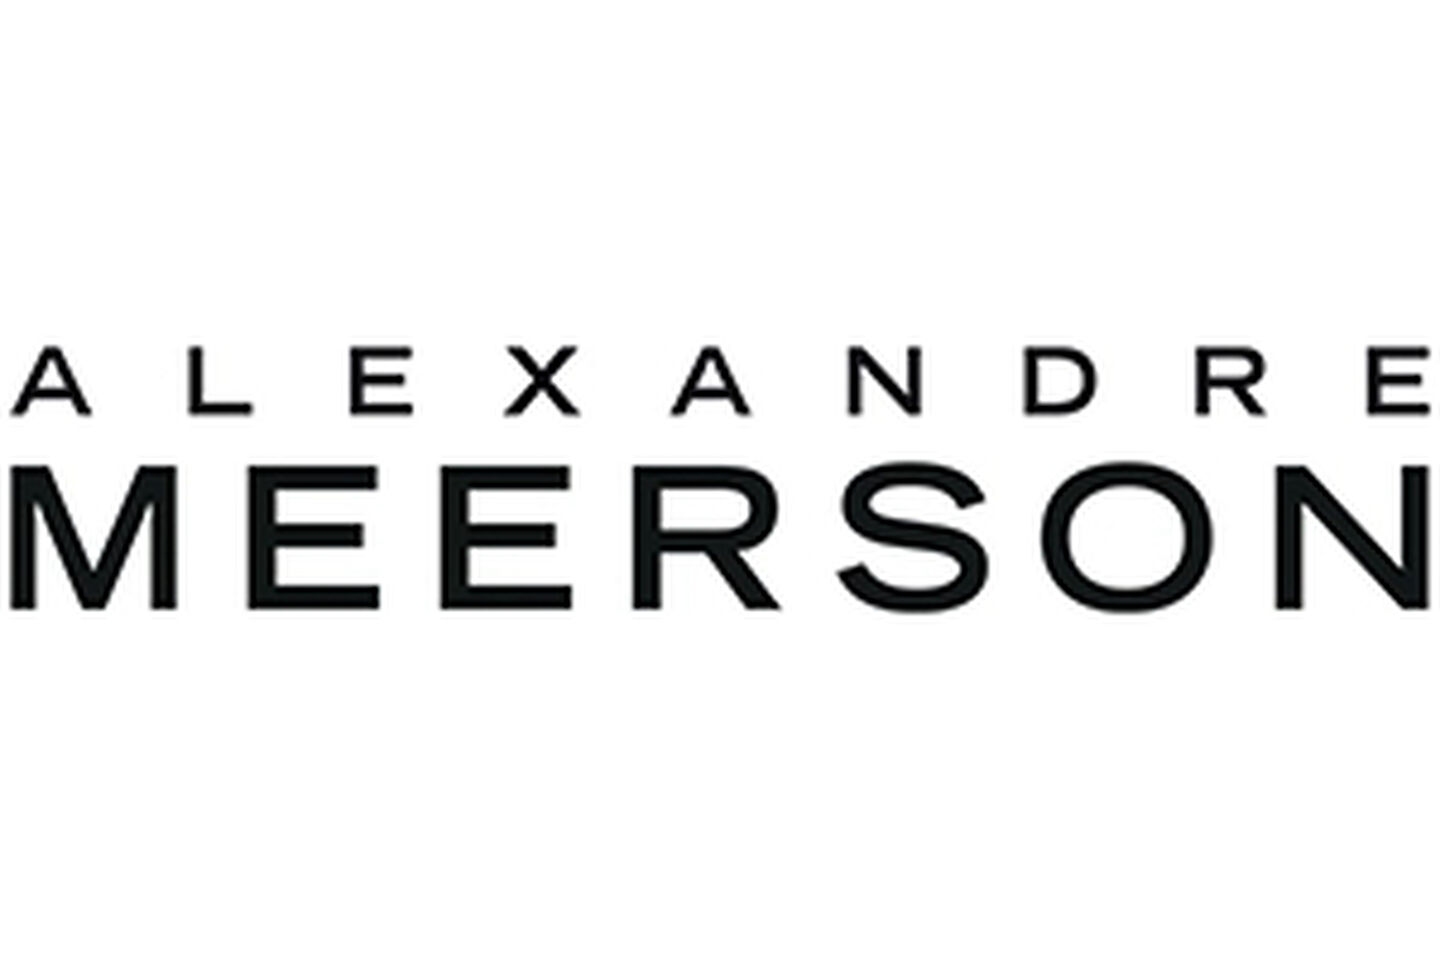 Alexandre Meerson Logo